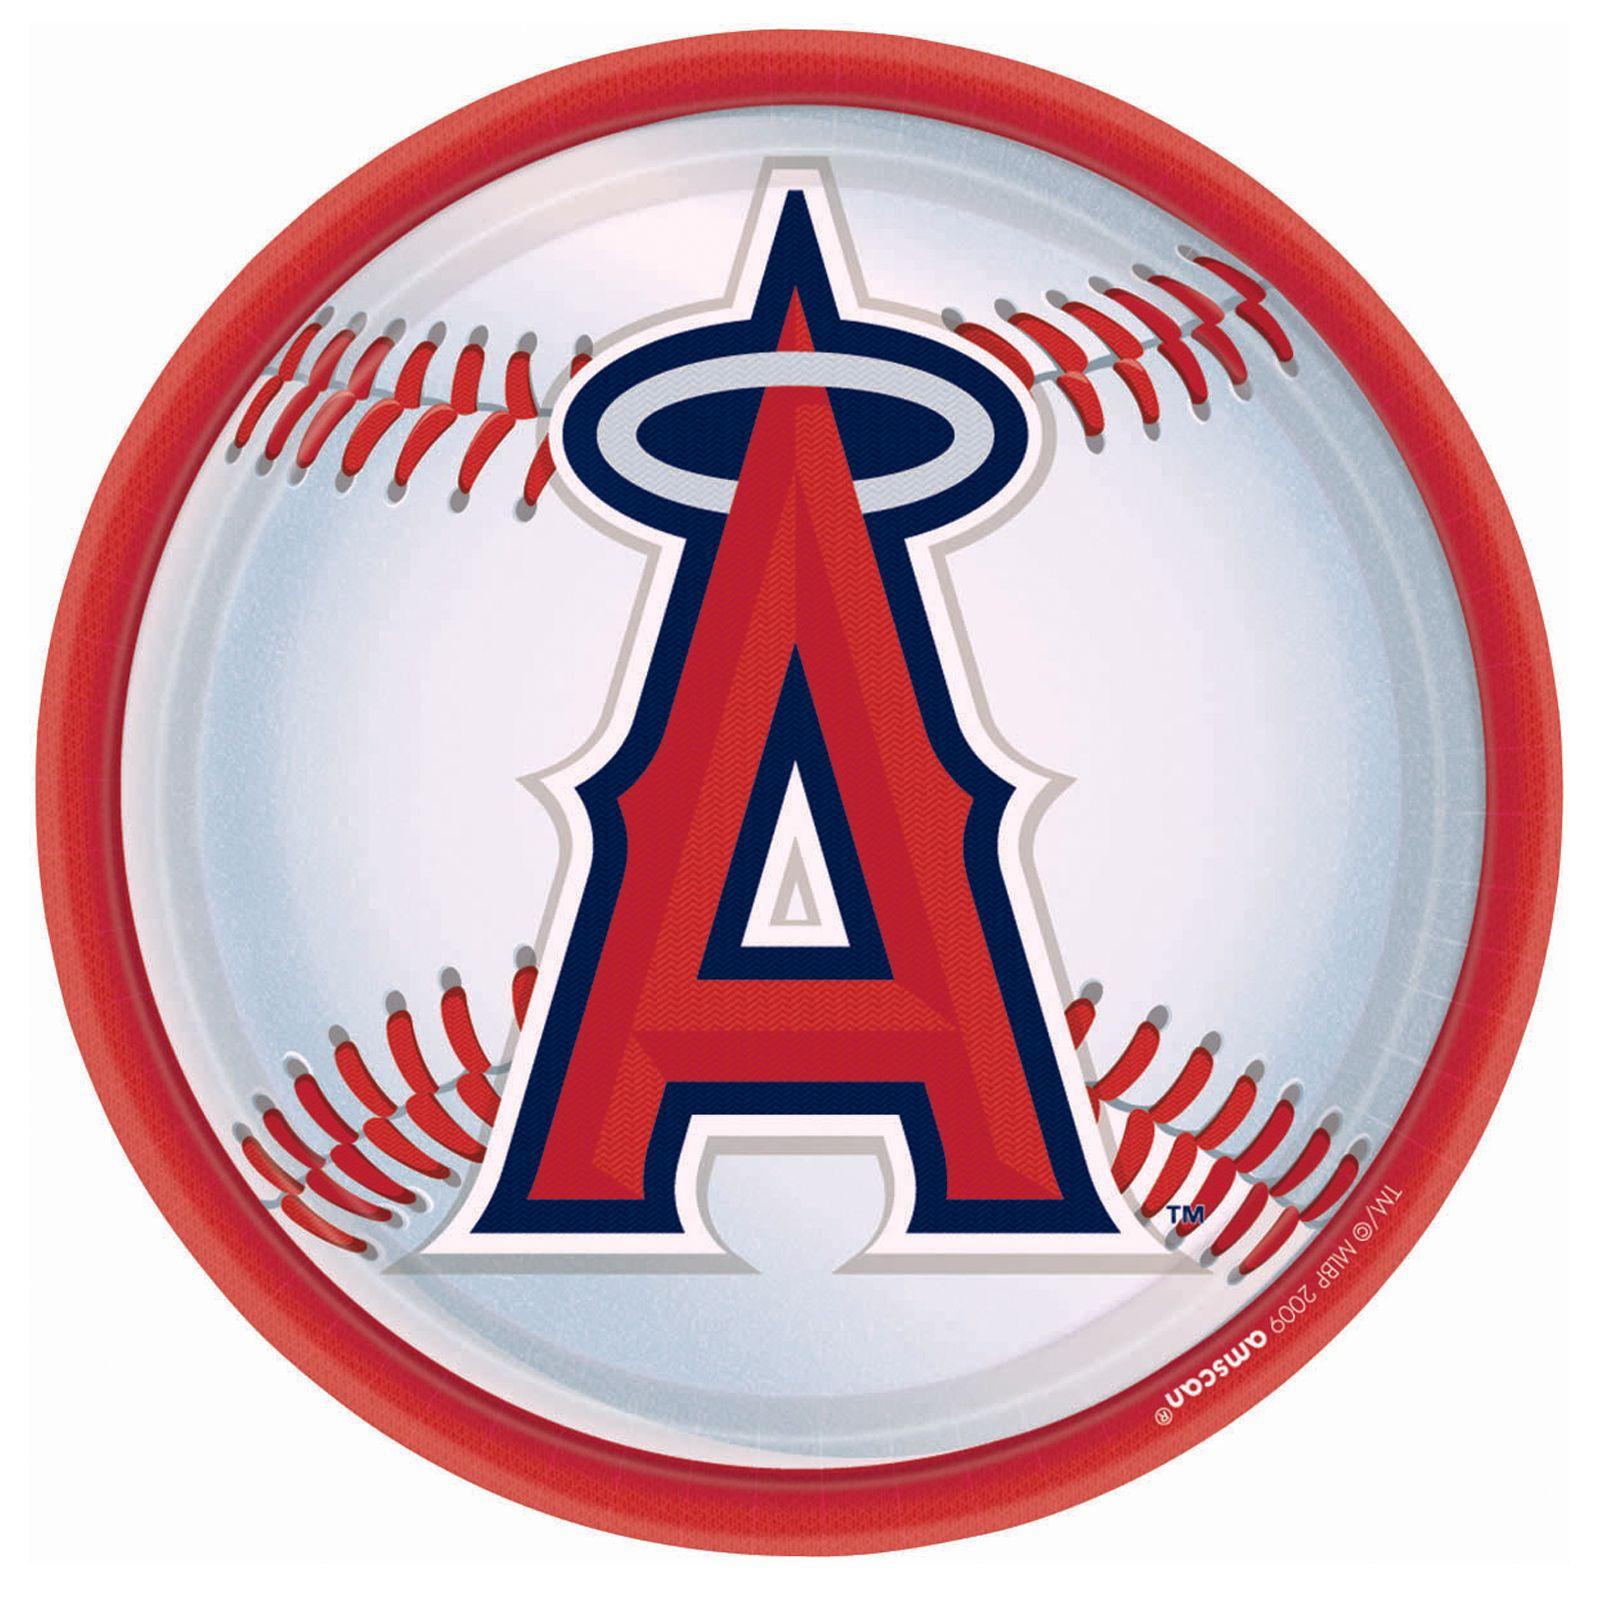 LC Baseball Logo - Free Angels Baseball, Download Free Clip Art, Free Clip Art on ...